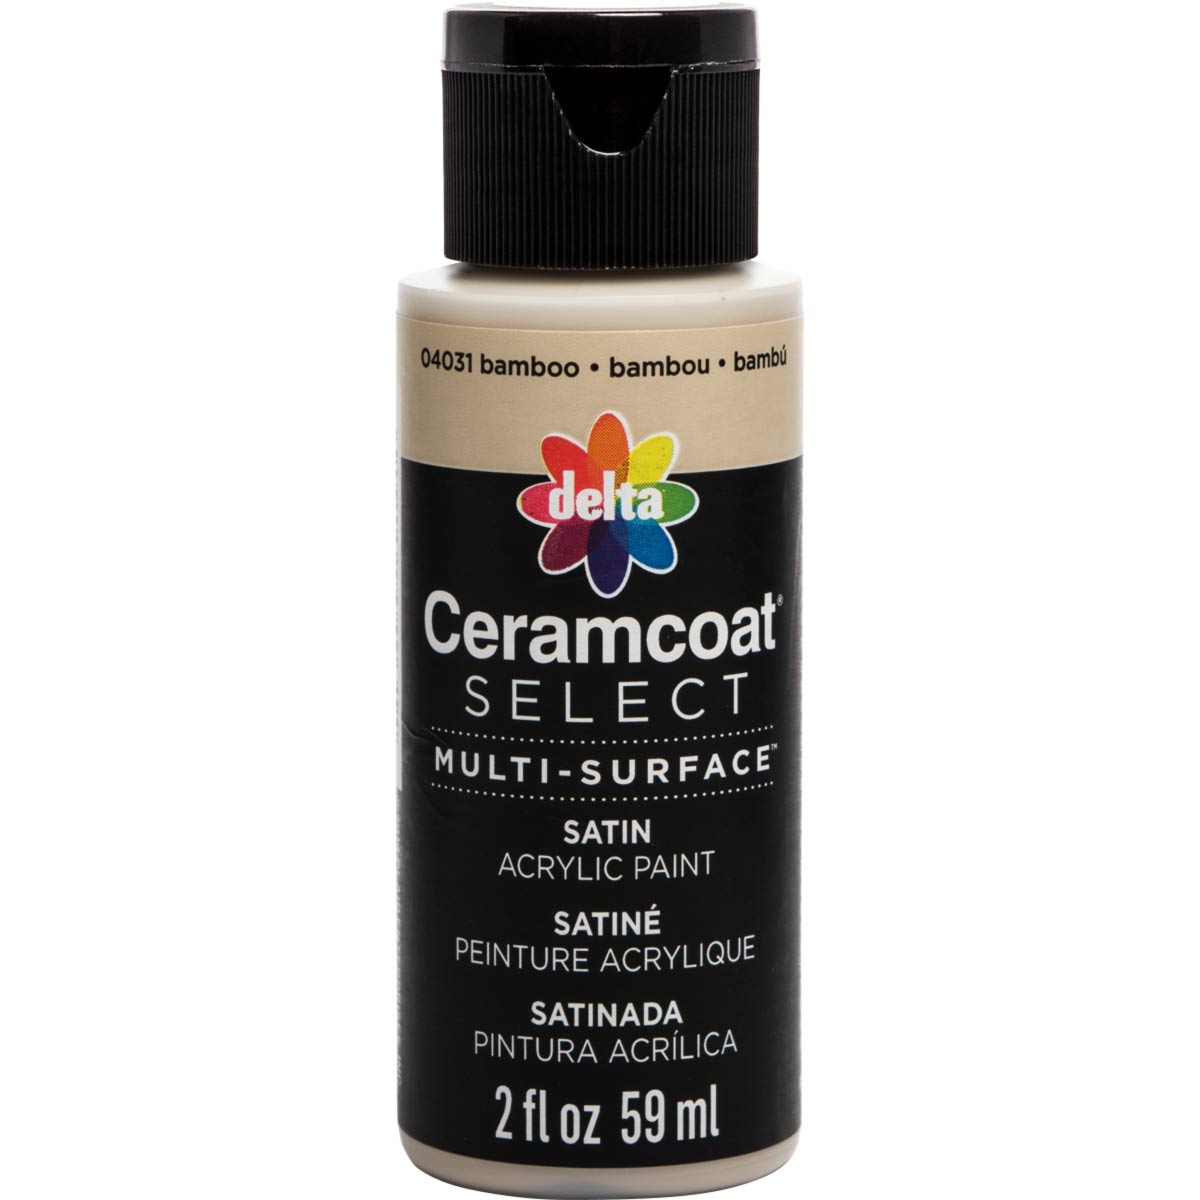 Delta Ceramcoat ® Select Multi-Surface Acrylic Paint - Satin - Bamboo, 2 oz. - 04031